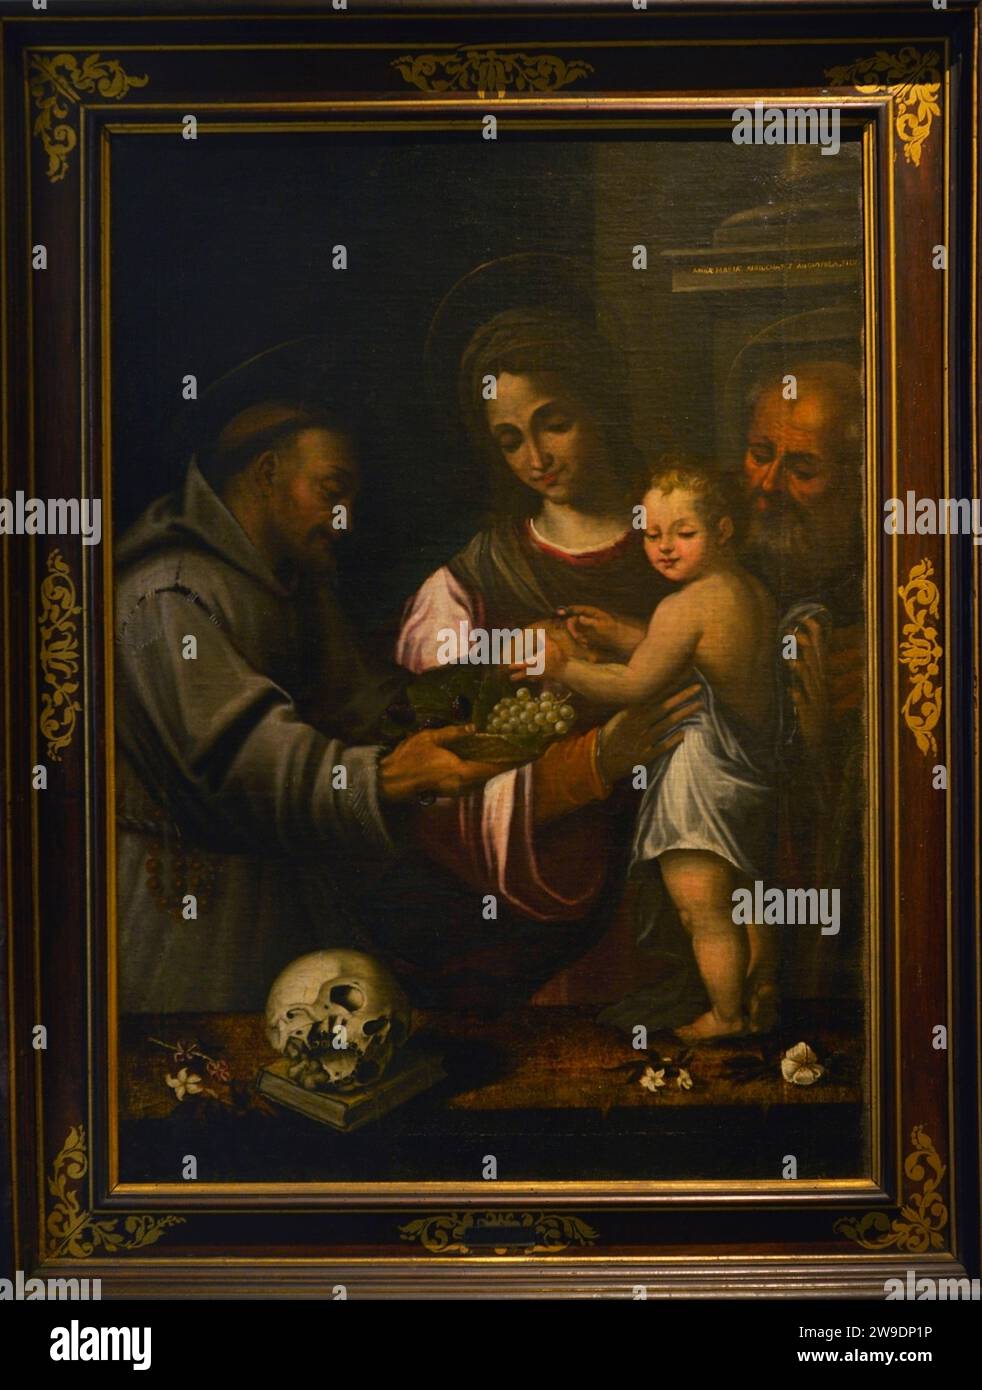 Pietro Martine Alberti (1555-1611) Peintre italien. Sainte famille avec Saint François. Huile sur toile. Museo Civico Ala Ponzone. Cremona. Lombardie. Italie. Banque D'Images